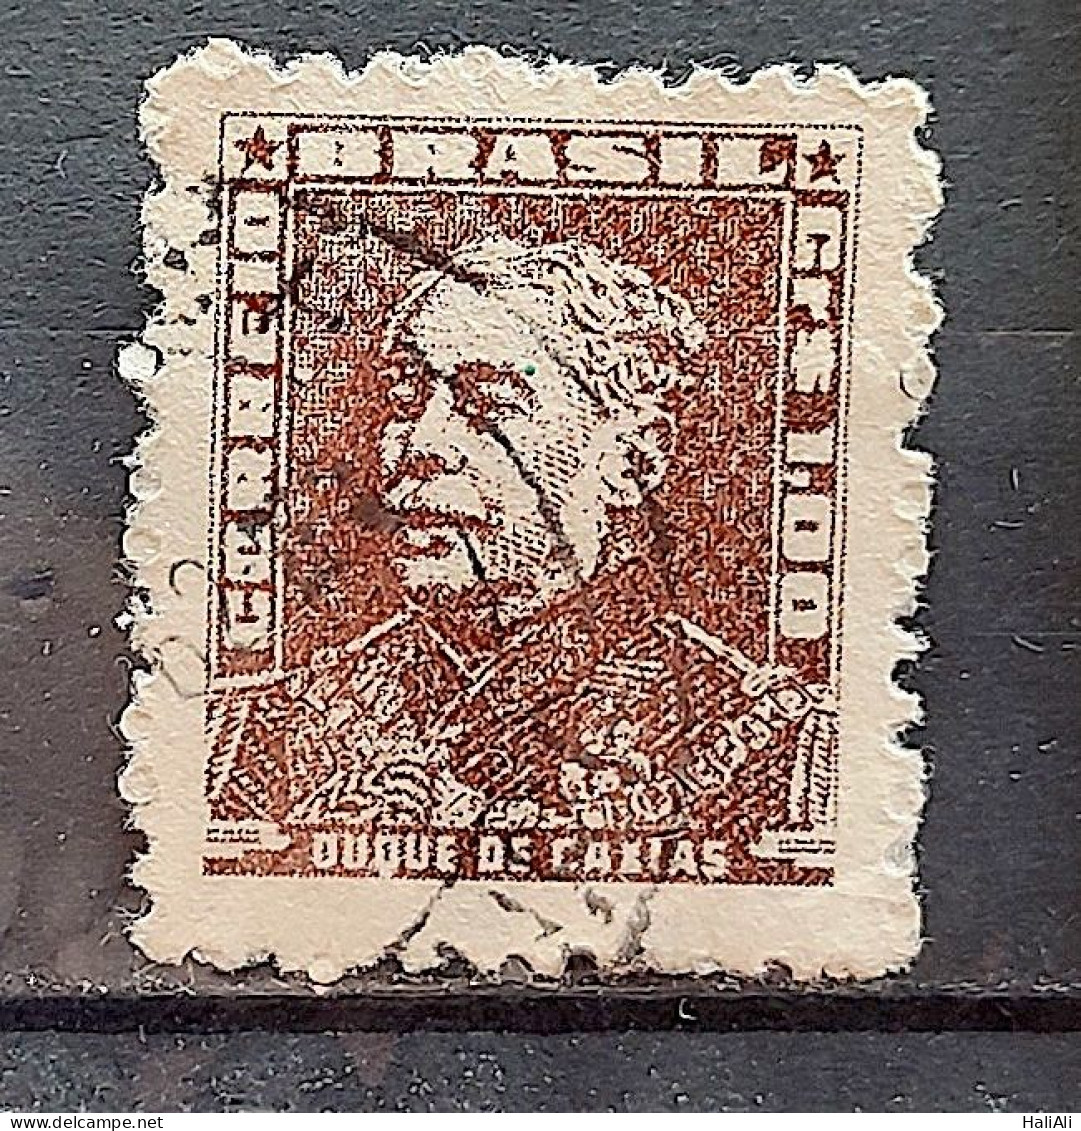 Brazil Regular Stamp Cod RHM 515 Great-granddaughter Duque De Caxias Military 1961 Circulated 1 - Oblitérés